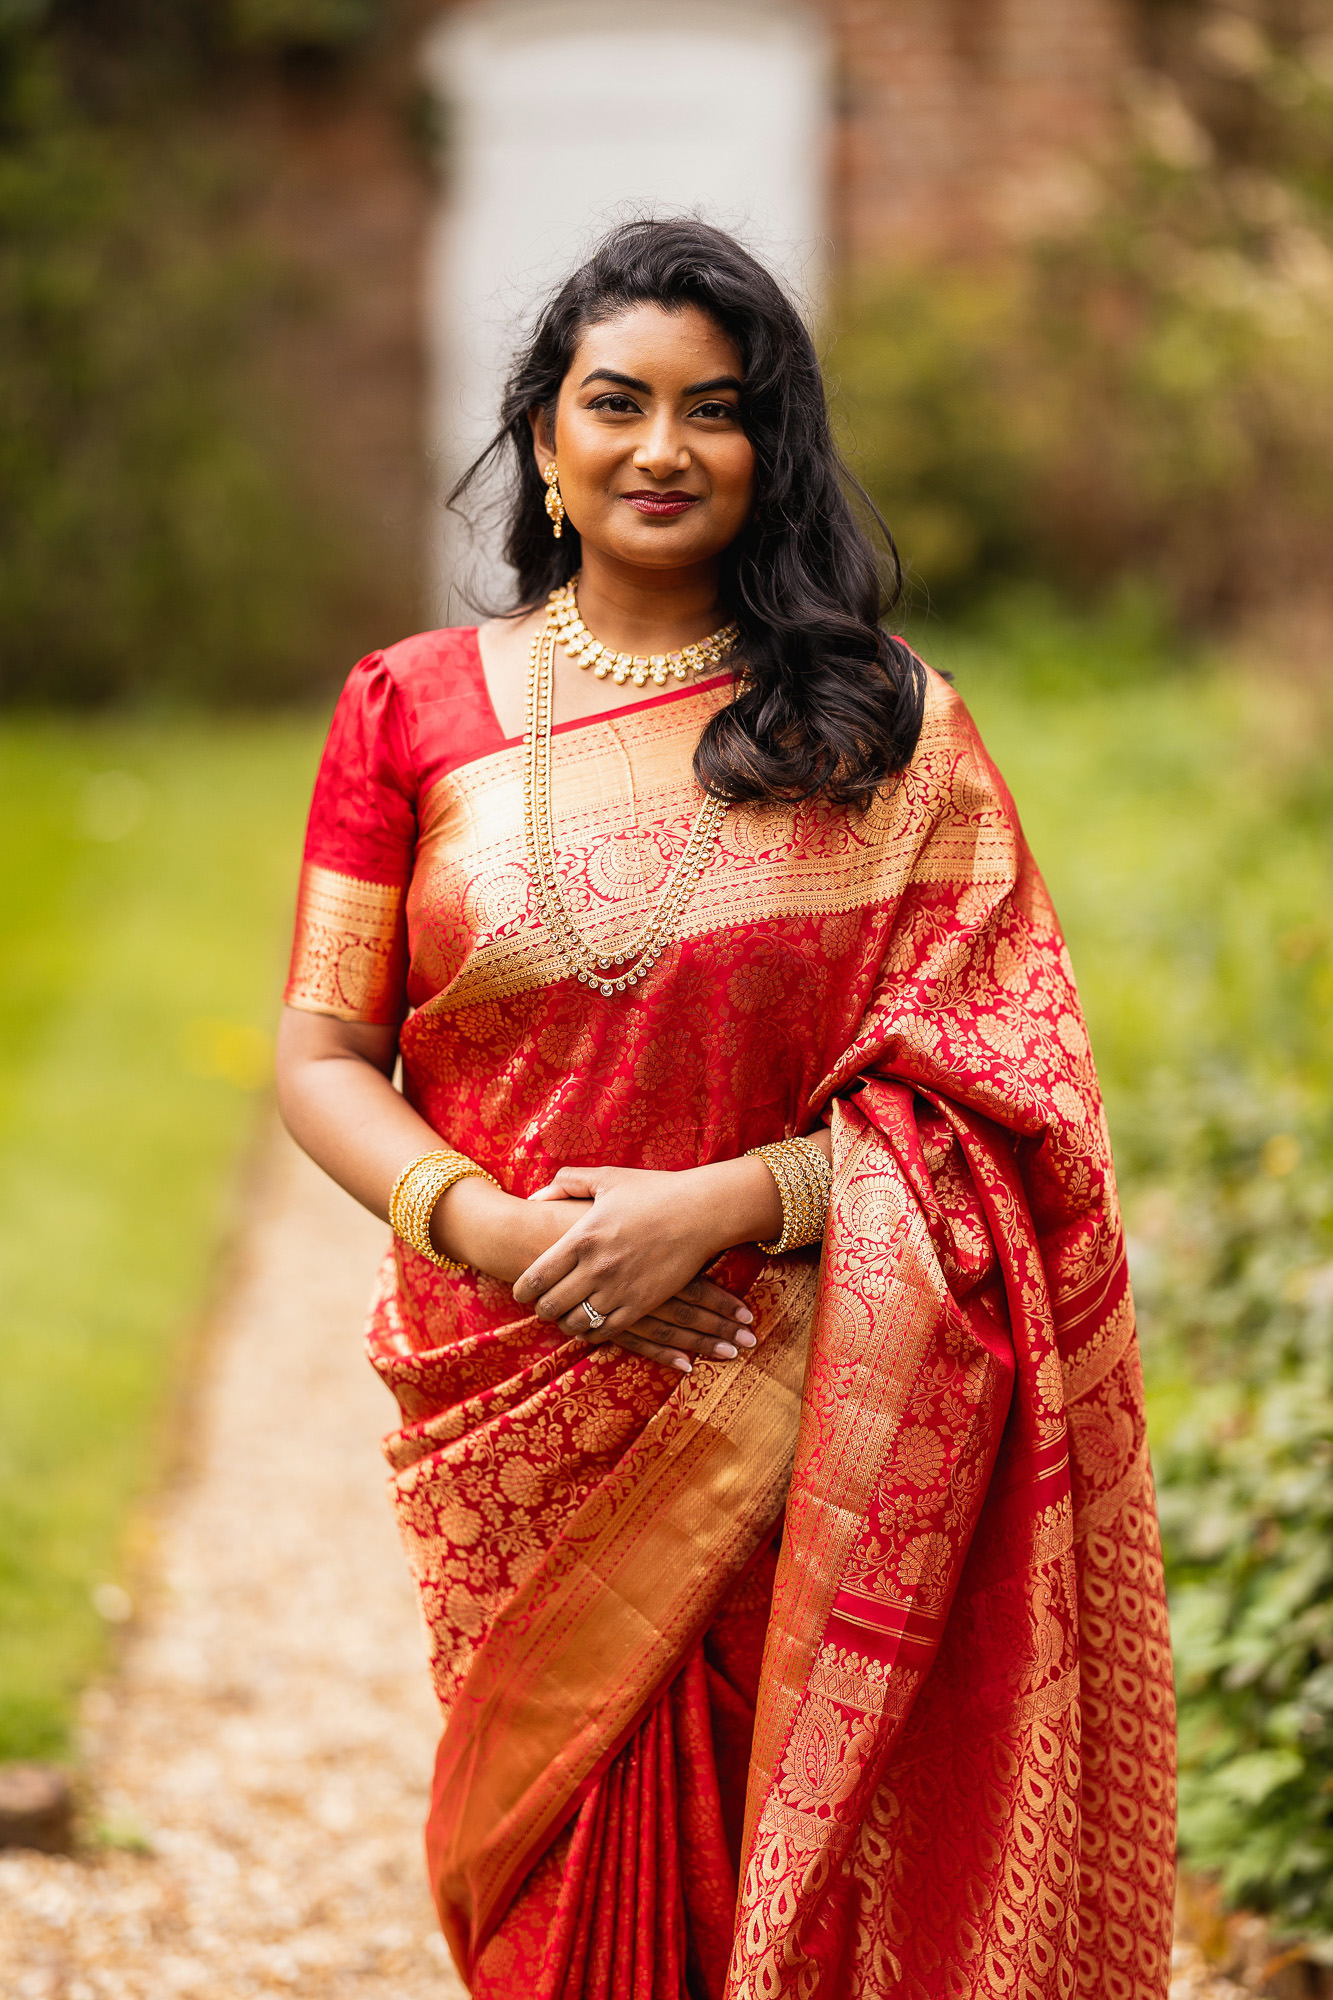 Tamil Wedding, Tamil Wedding Photography, Northbrook Park, brides portrait